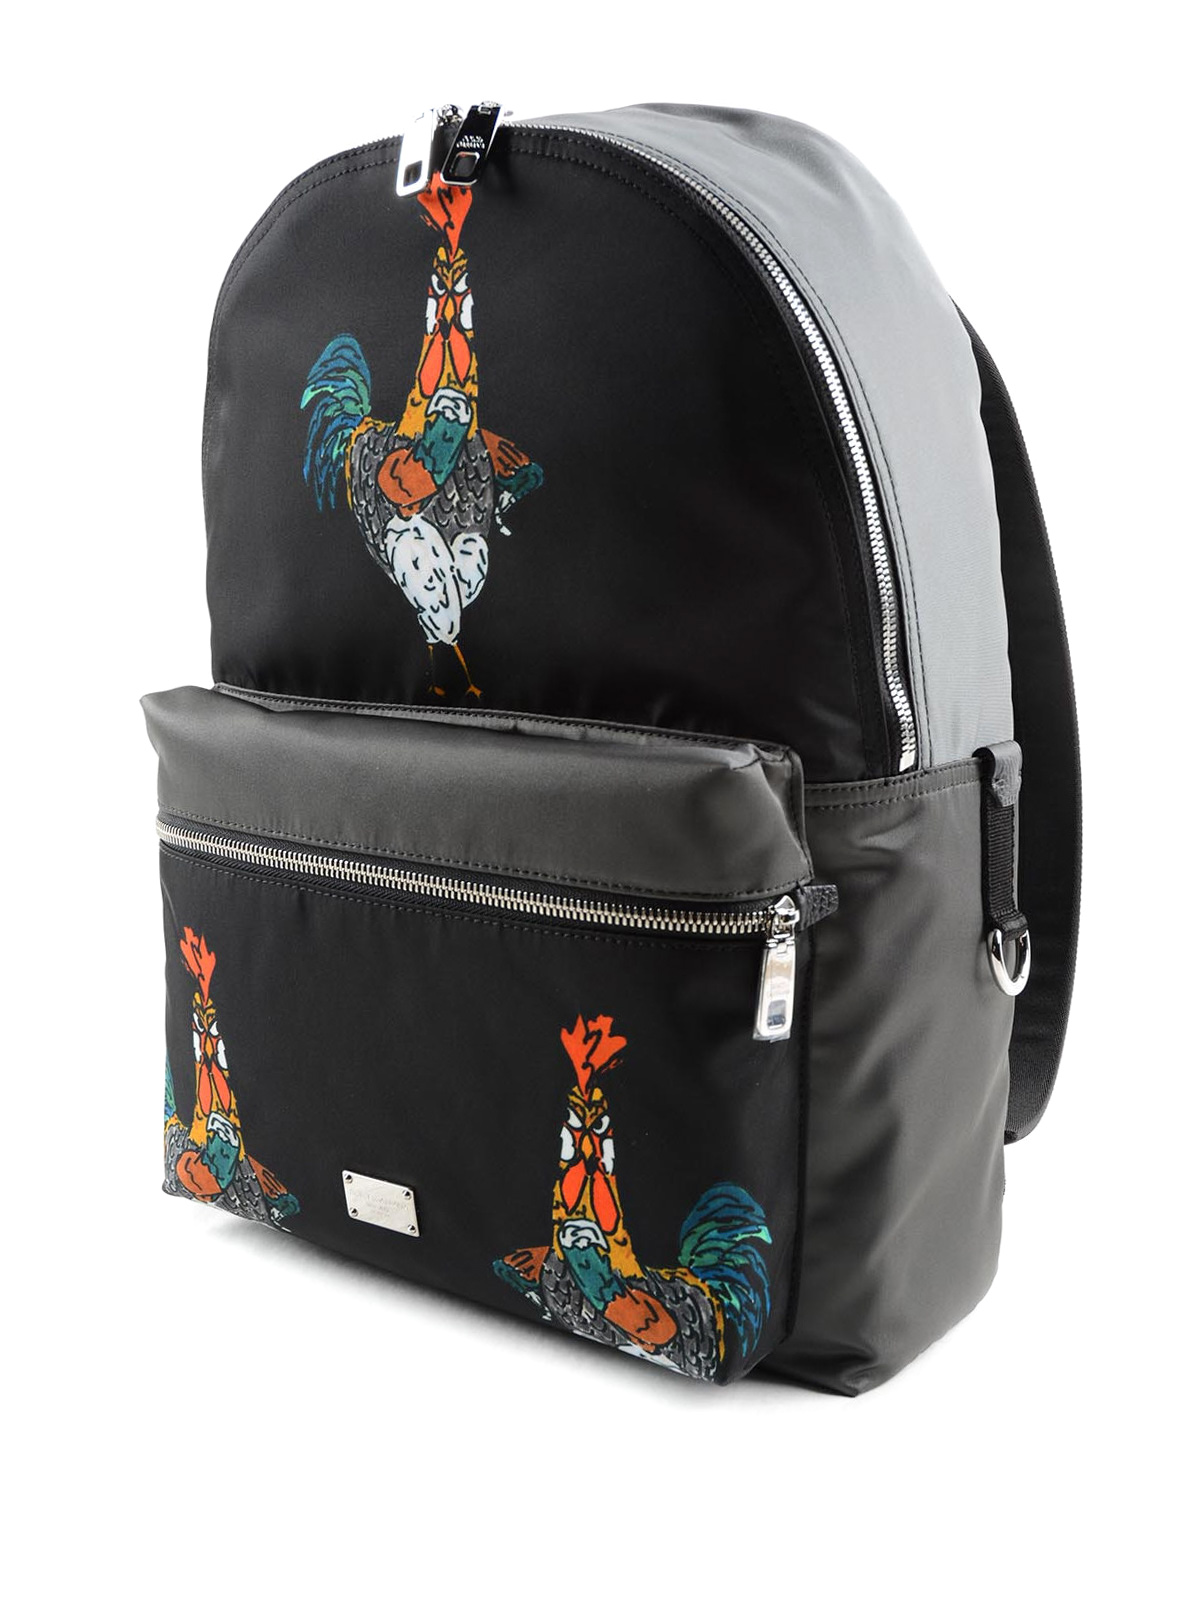 dolce gabbana backpack sale